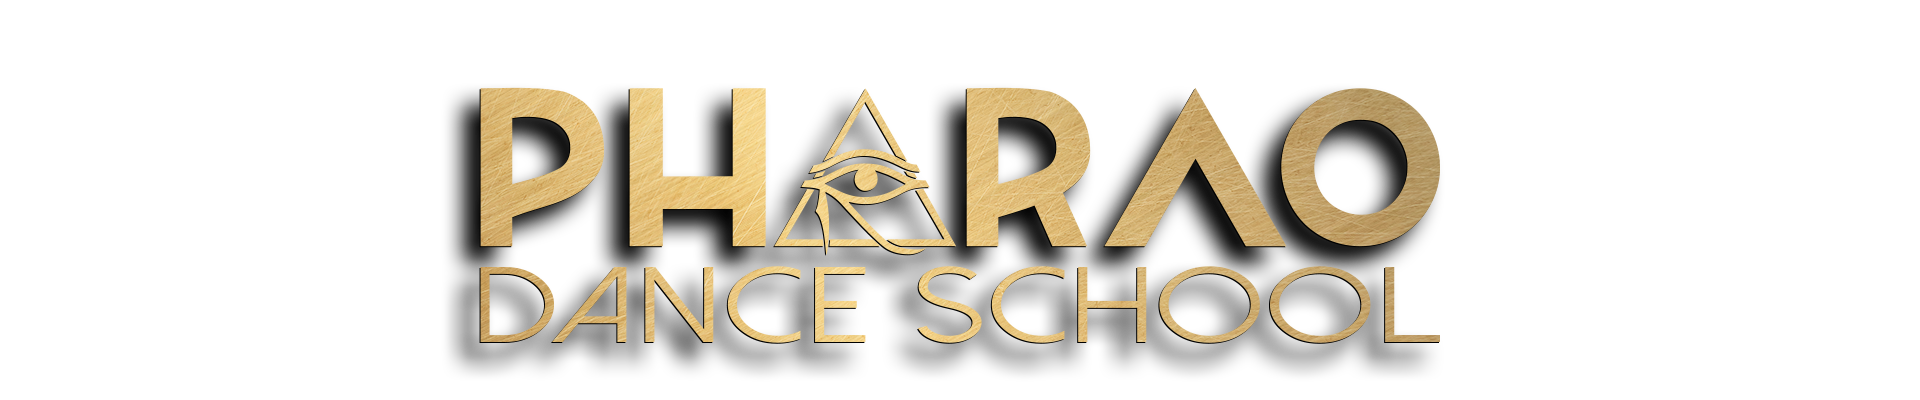 Pharao Dance School